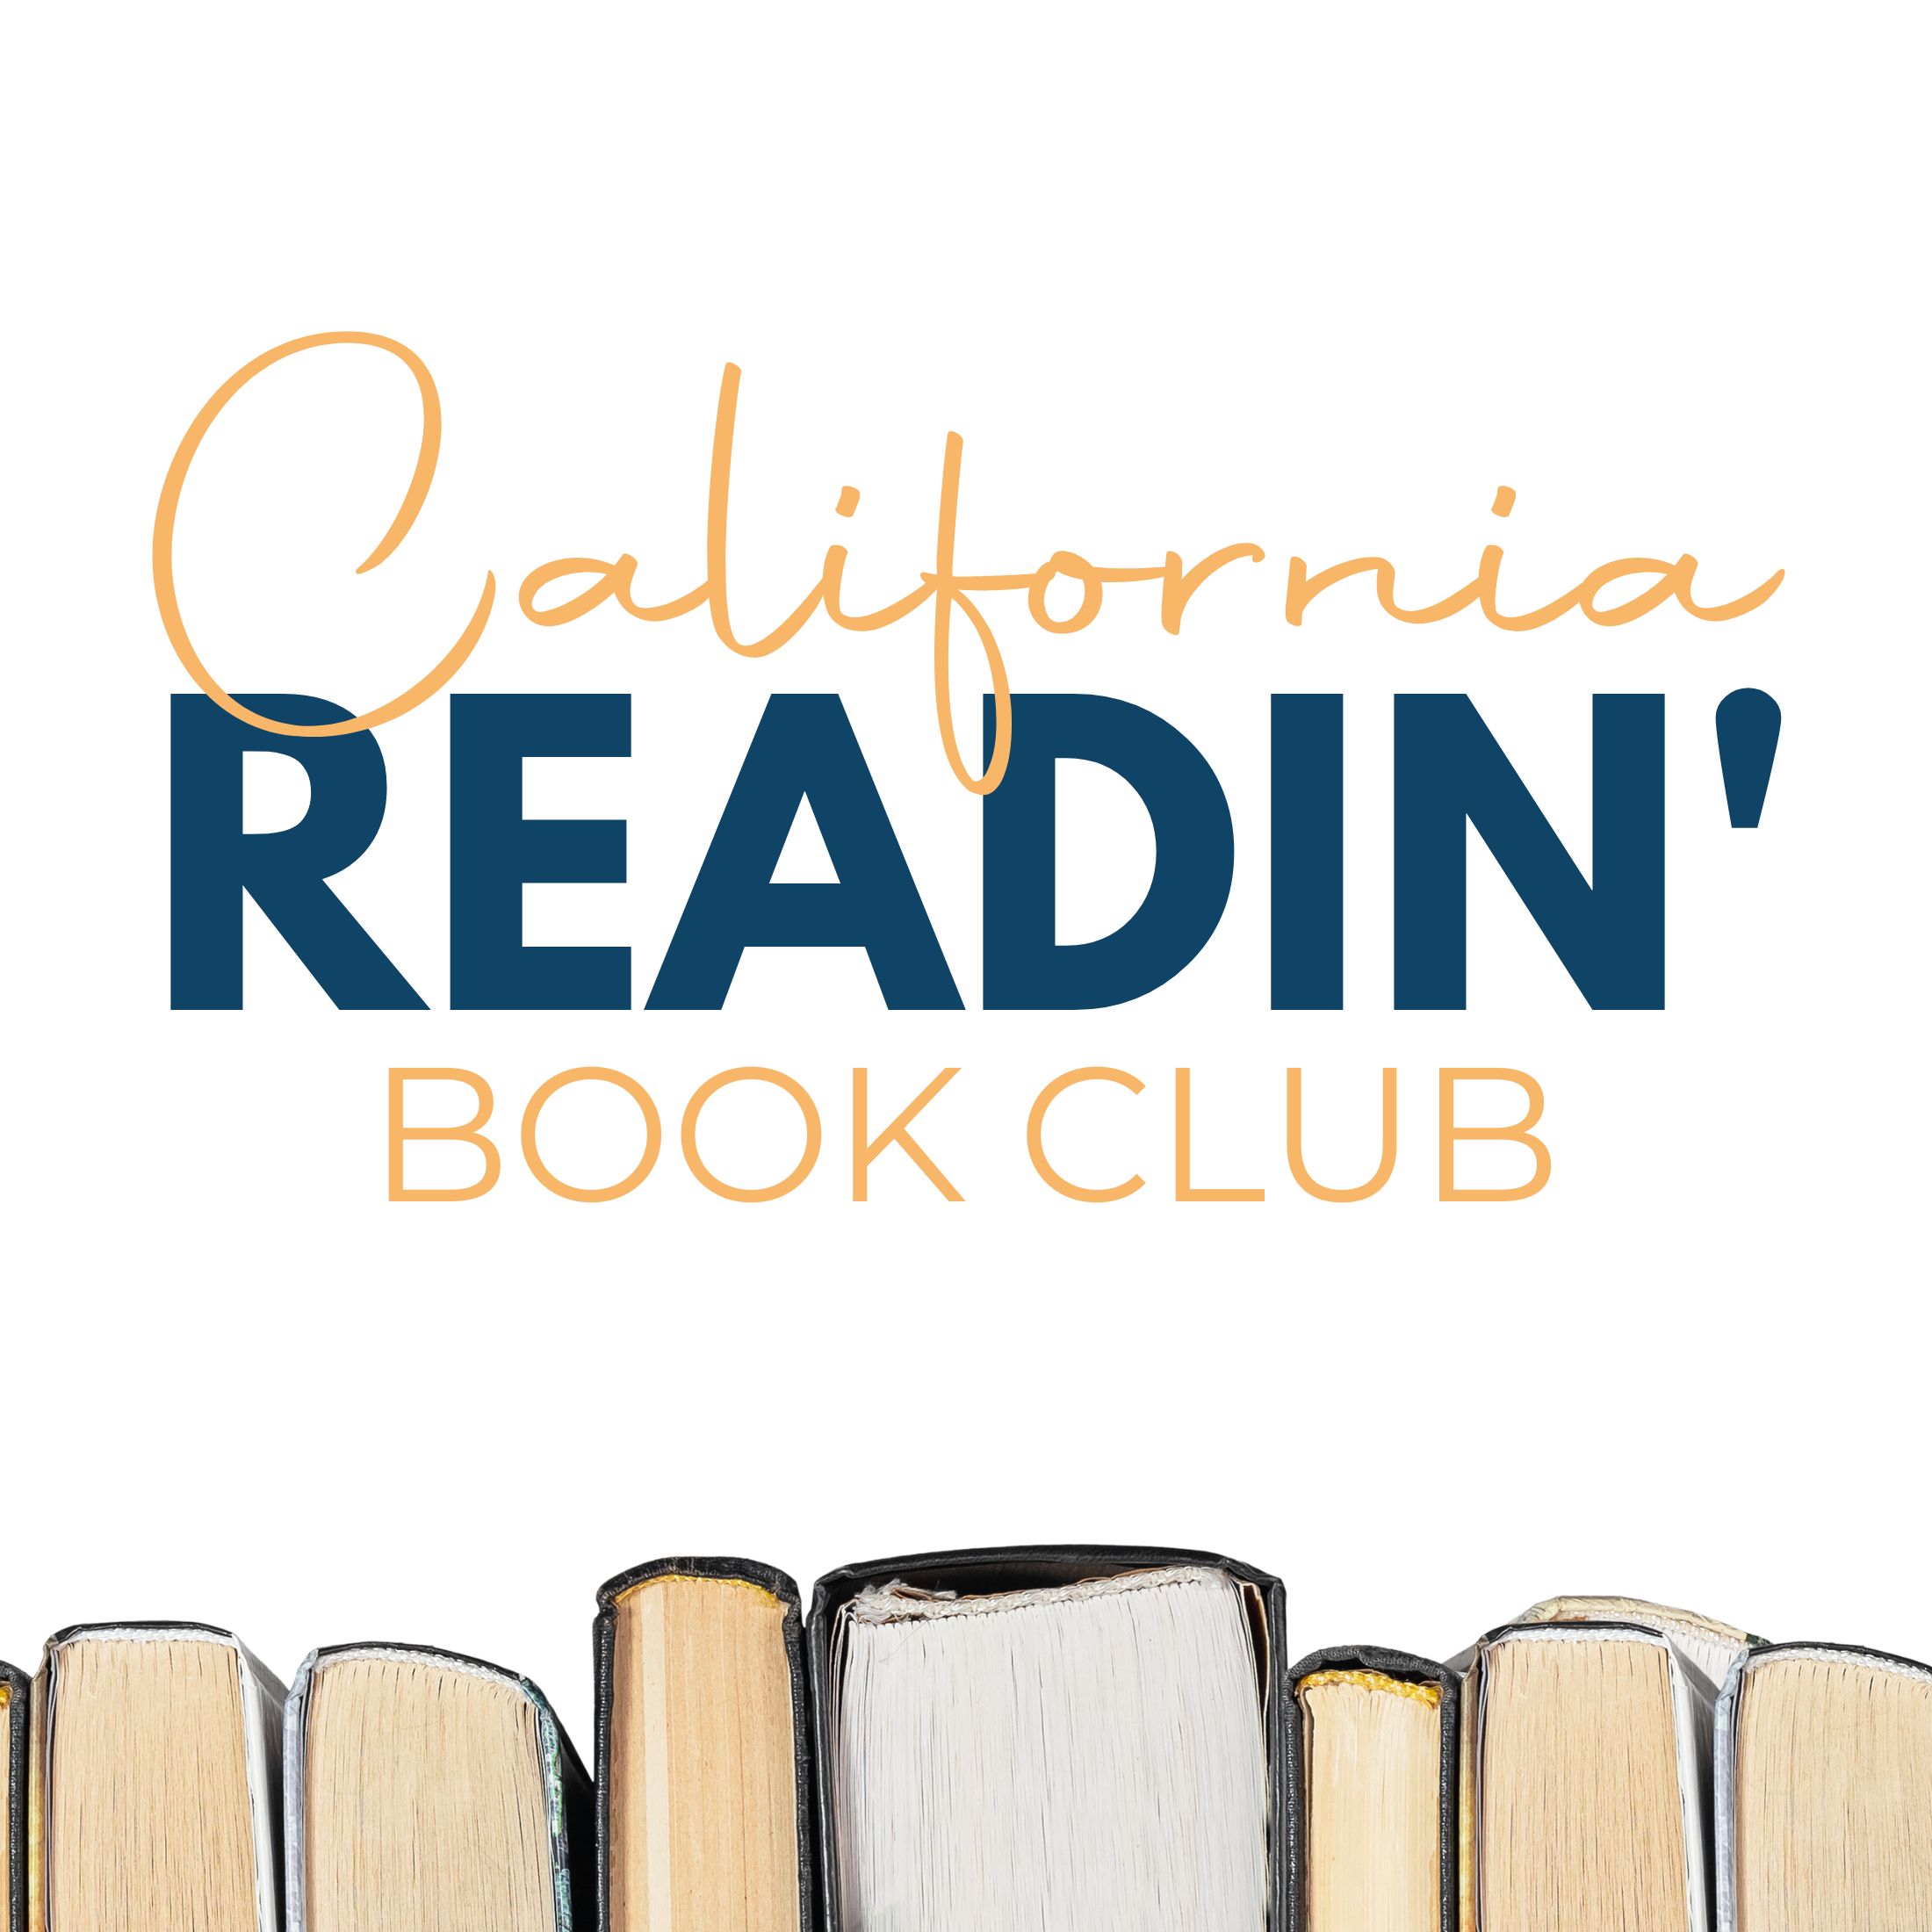 CA readin book club 2